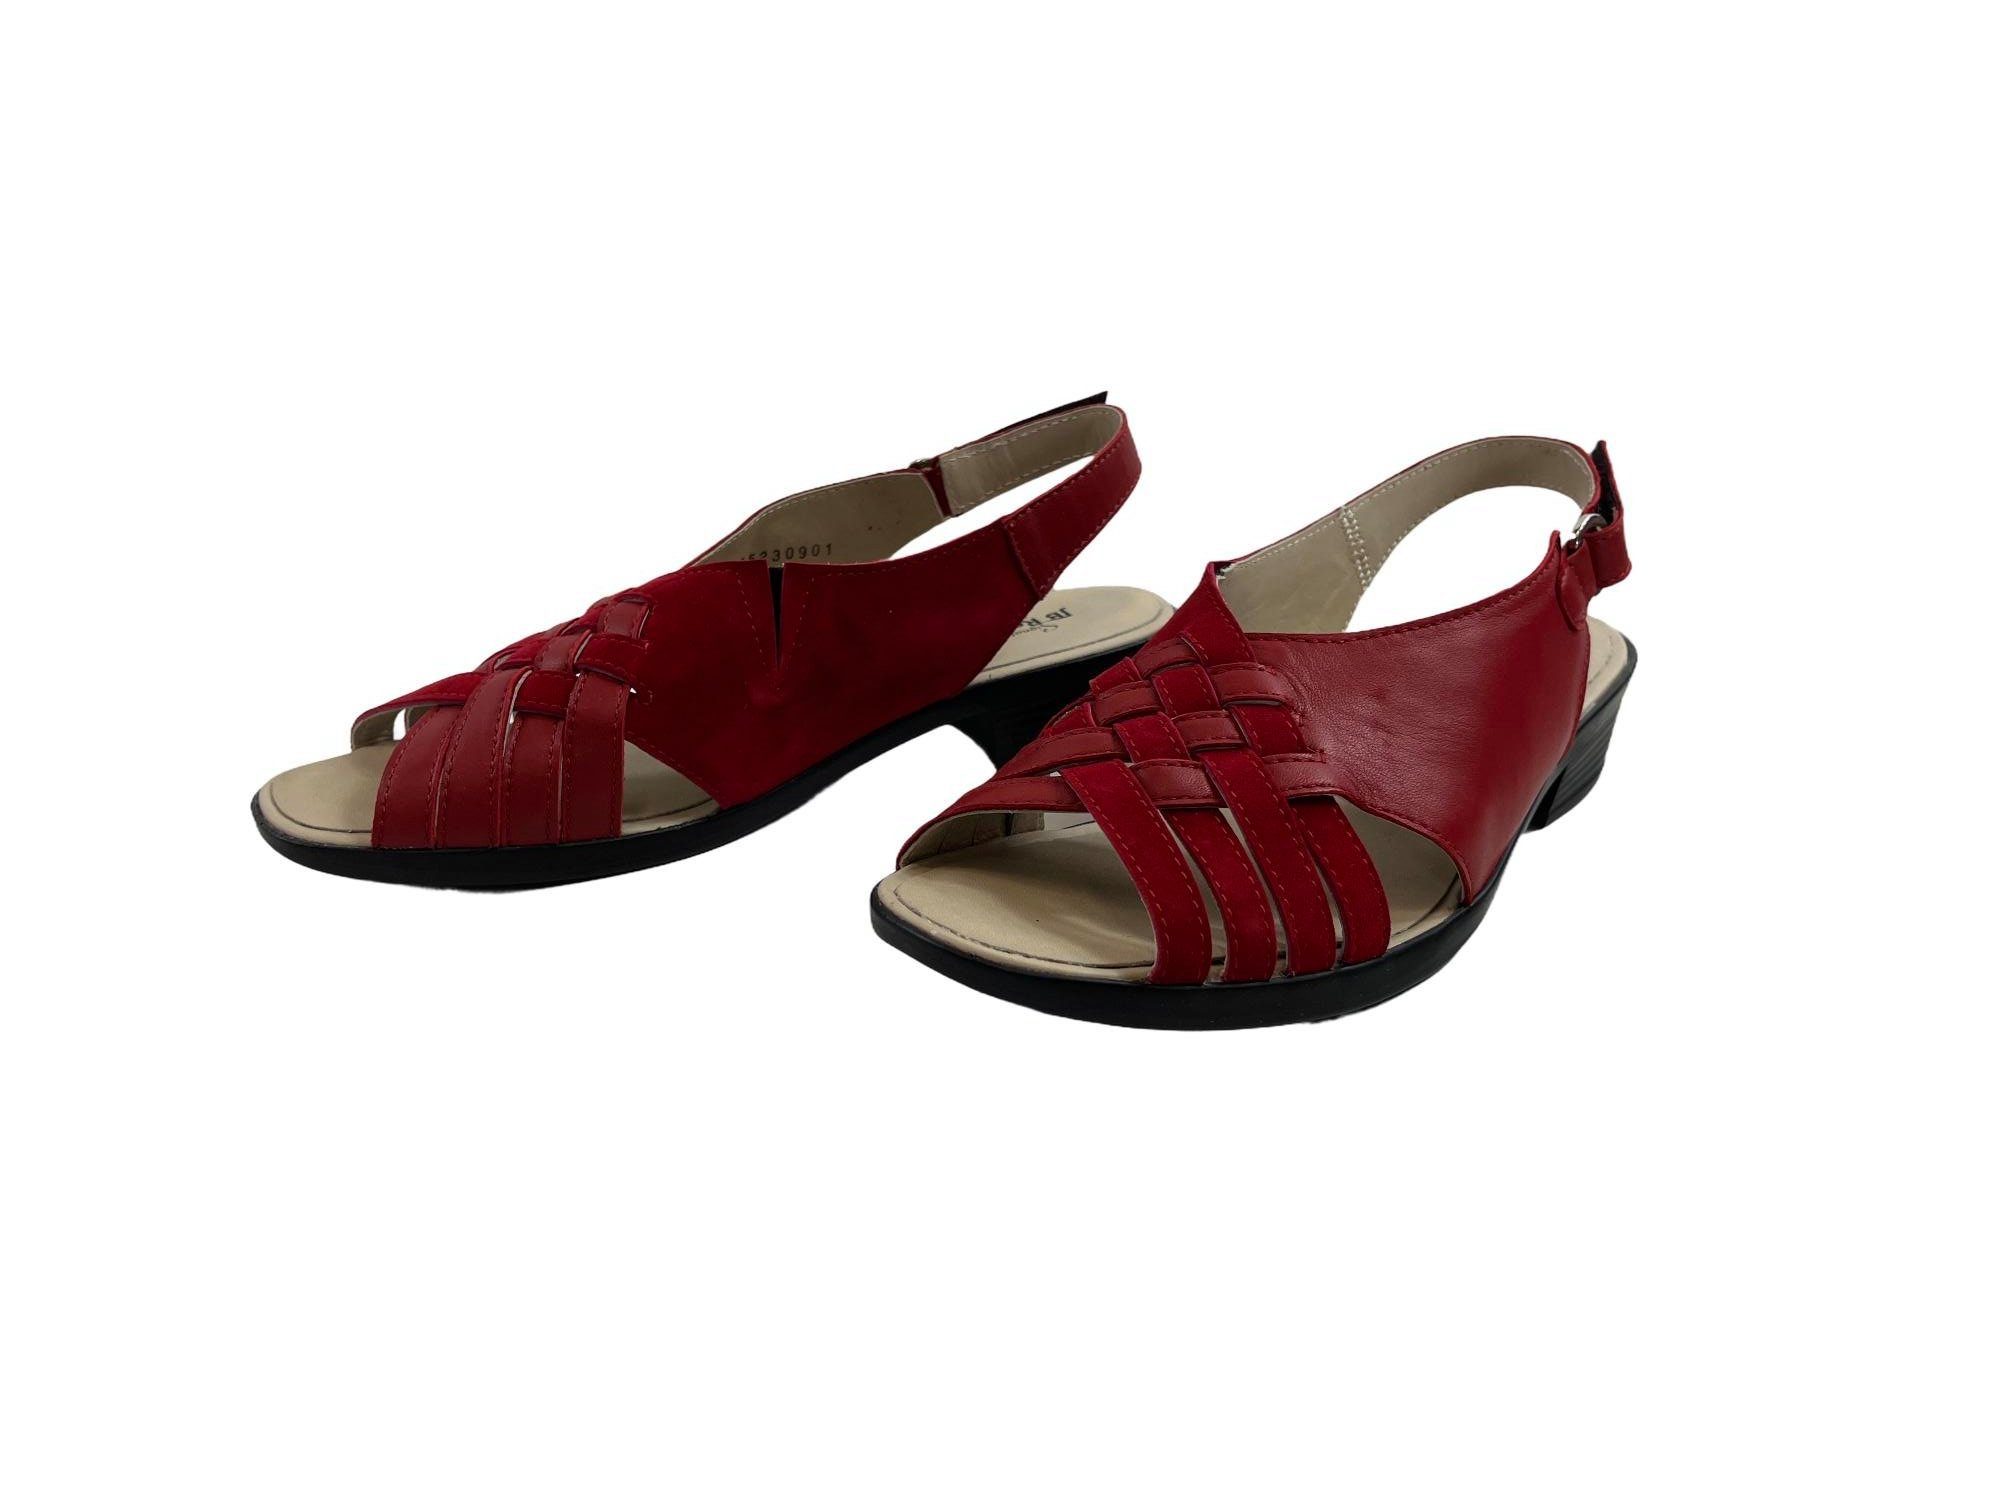 BÄR Damenschuh - Modell Achley in der Farbe Rot Sandale